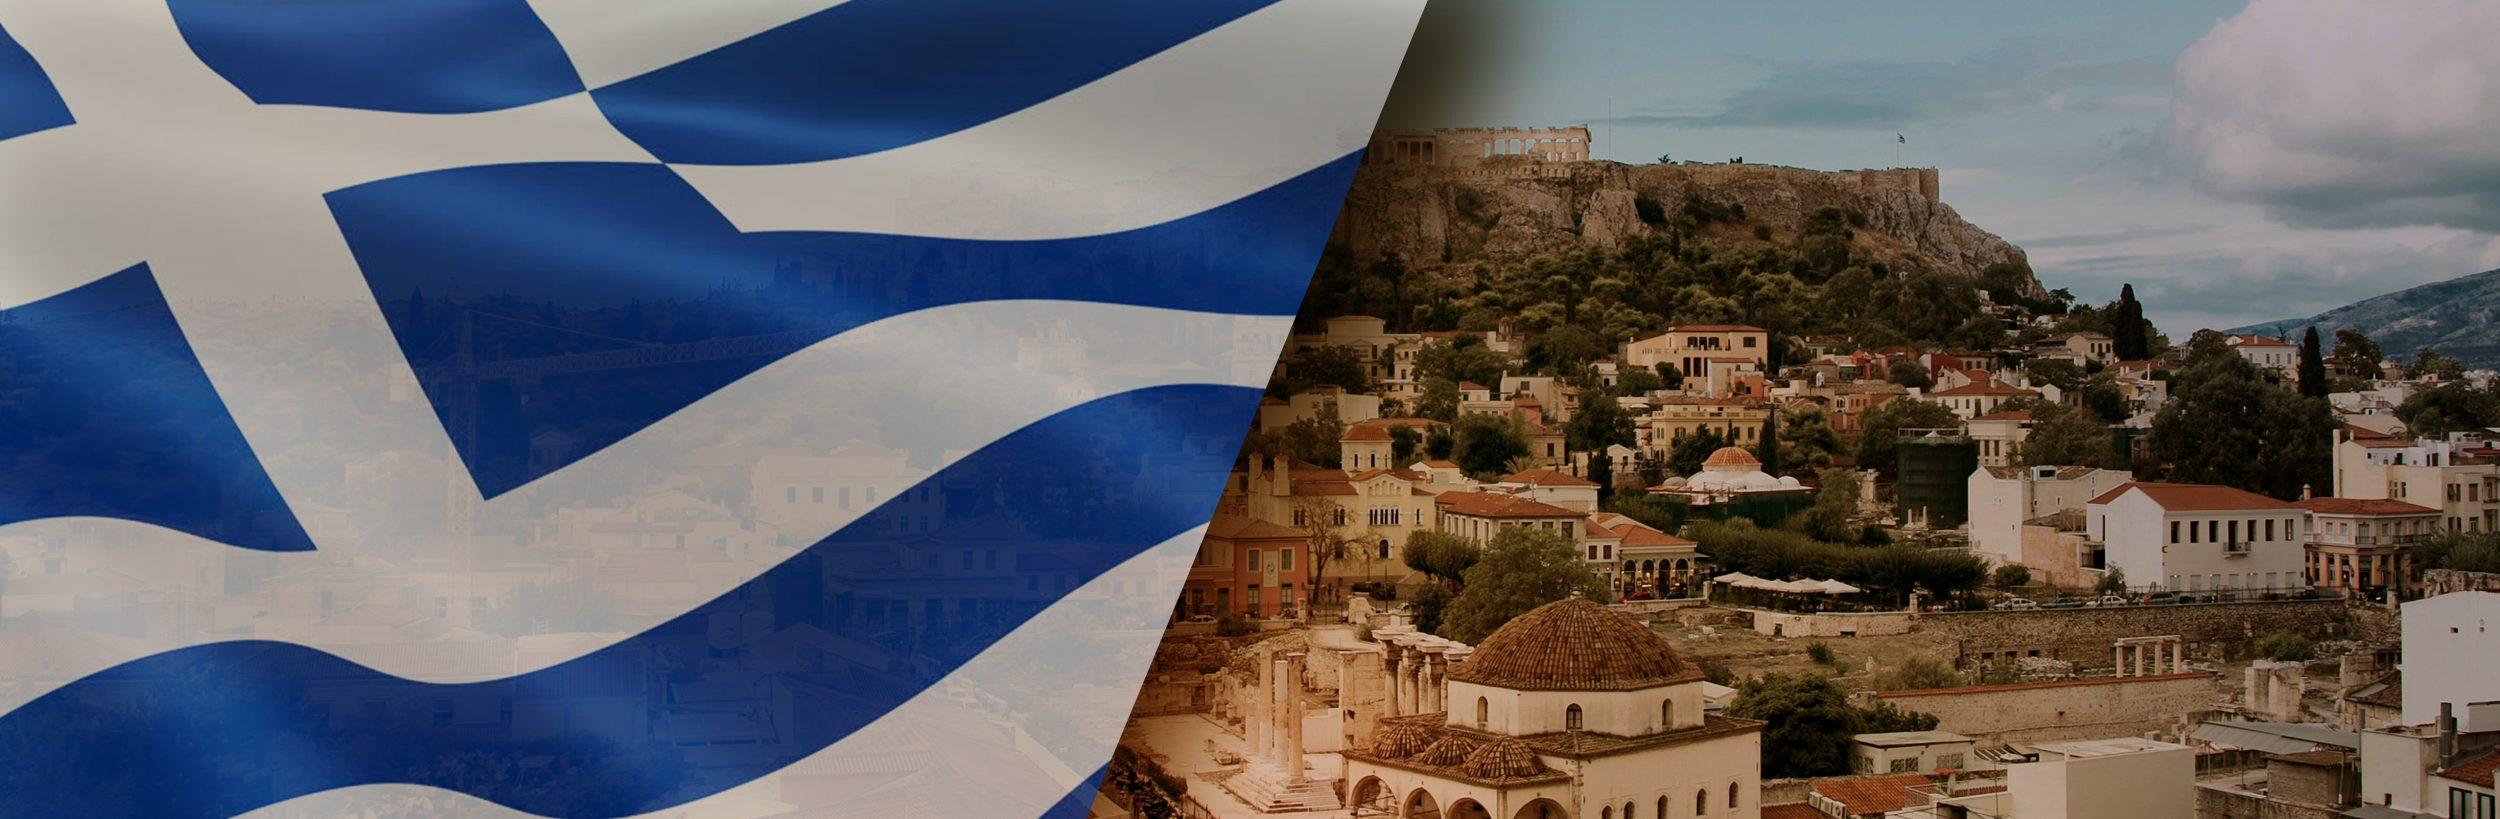 greece banner